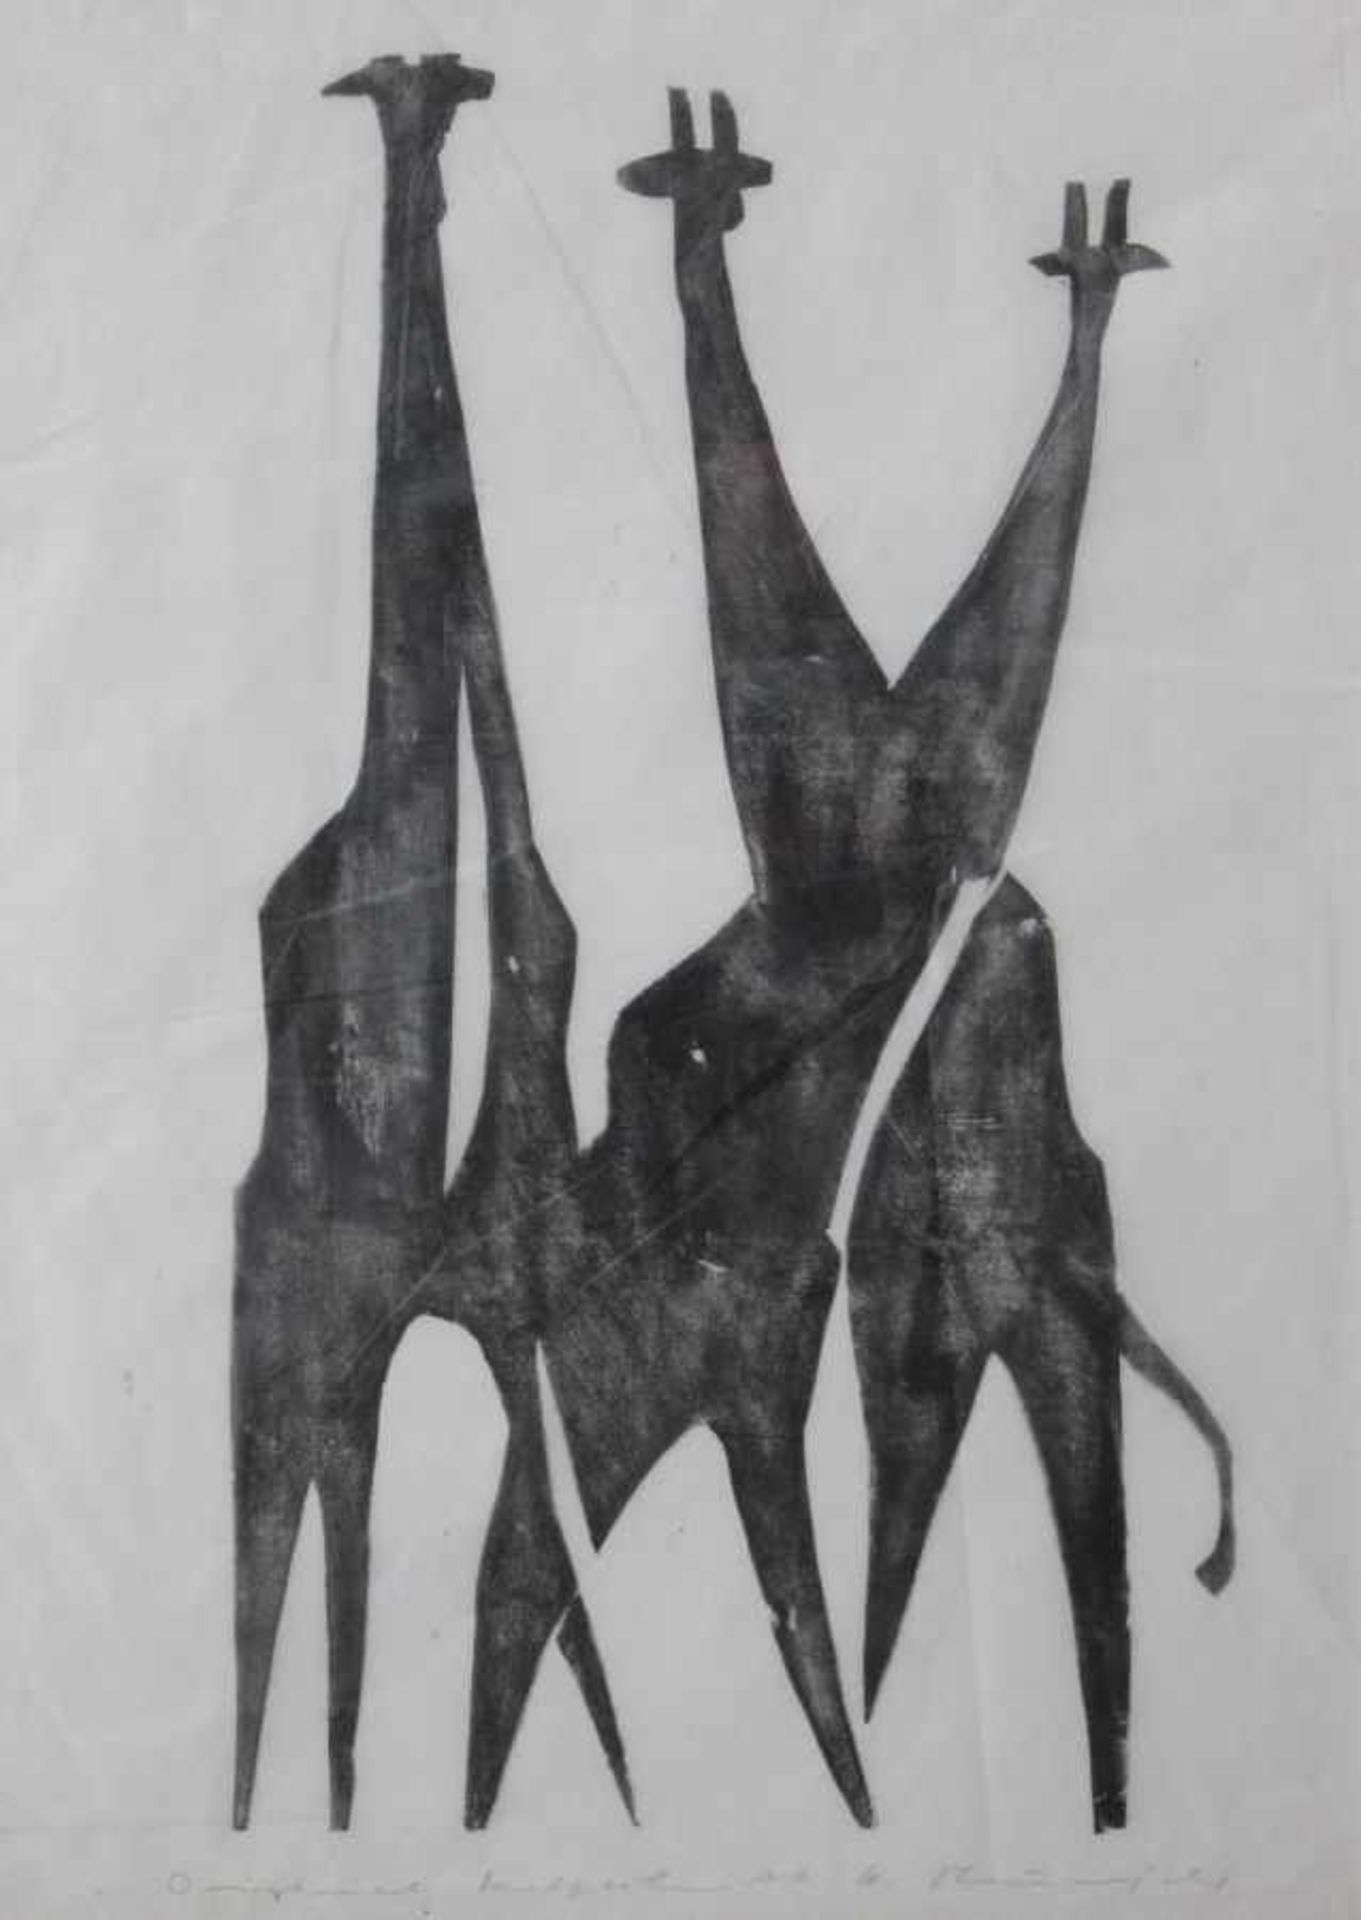 Holzschnitt - Heinz Theuerjahr (1913 - 1991) "Drei Giraffen", r.u. Bleistiftsignatur, Ausschnittmaße